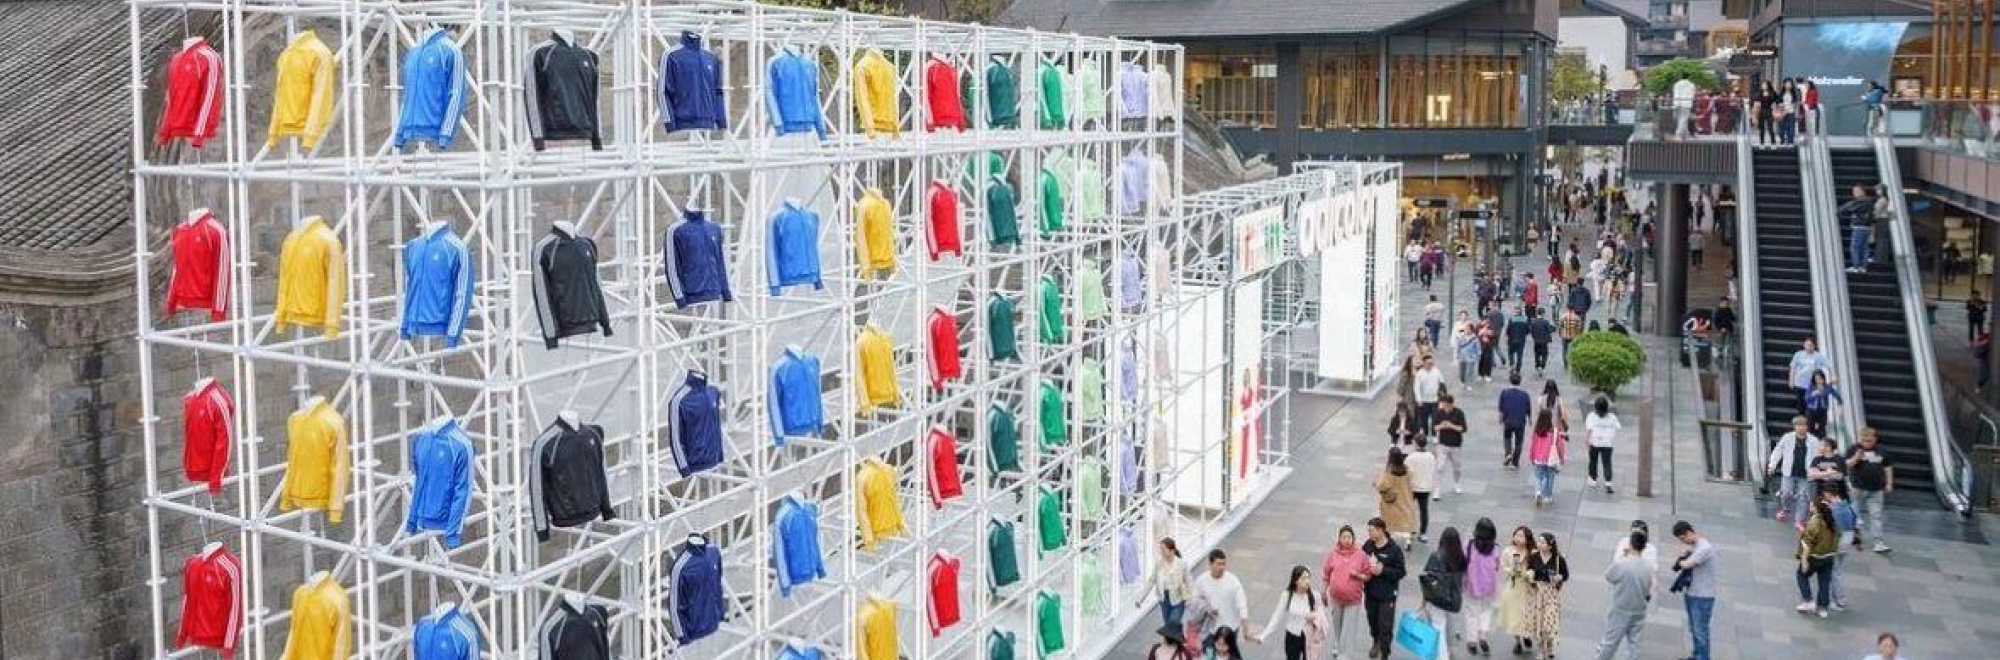 Adidas Originals’ installation bridges experiential, billboard advertising, and art